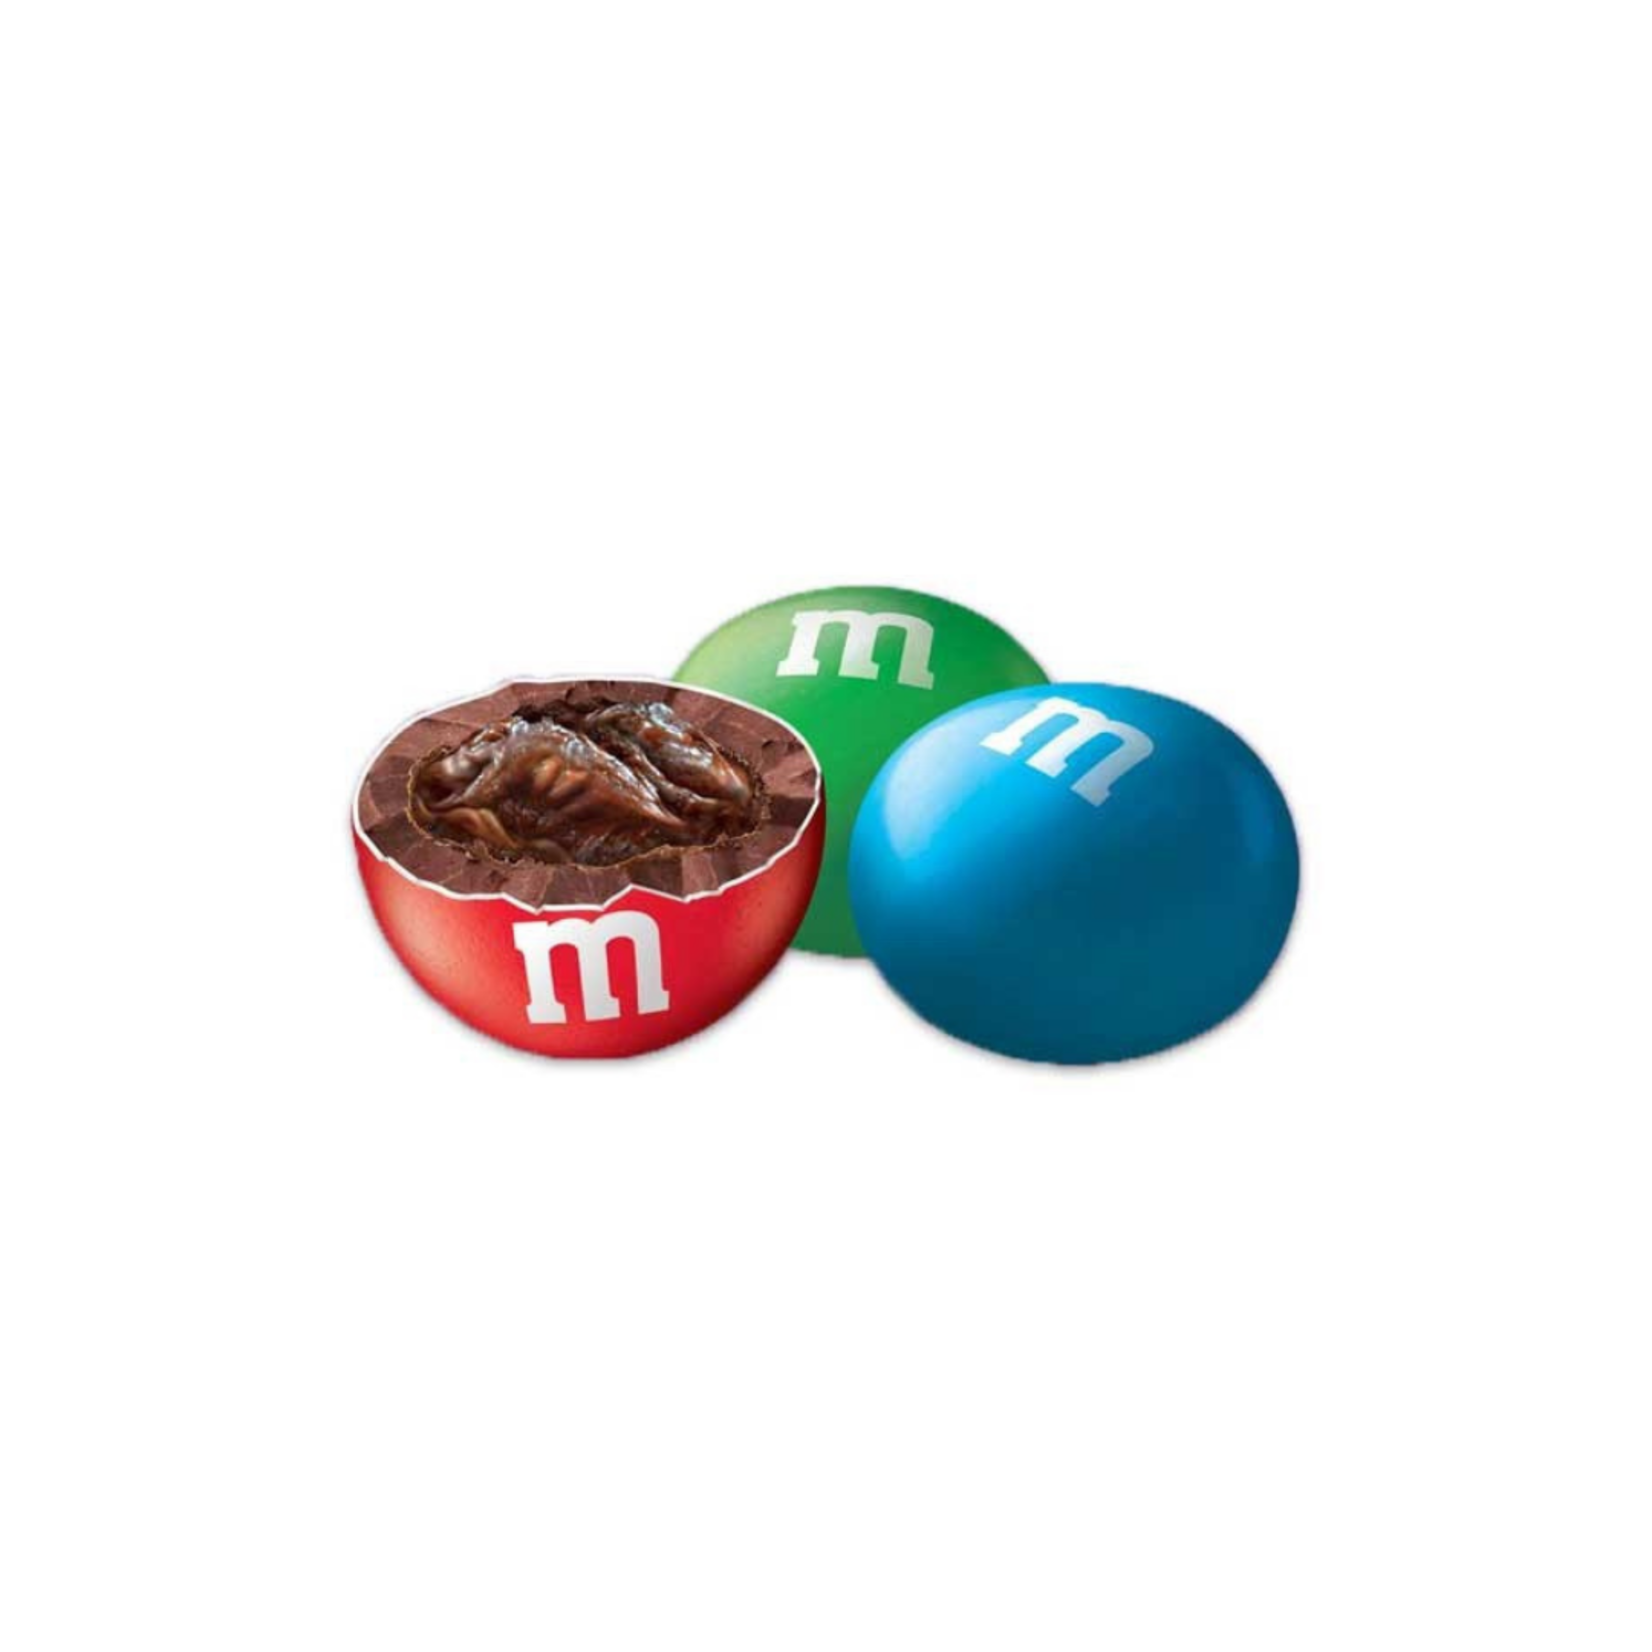 Mars M&Ms Fudge Brownie Share Size 24ct